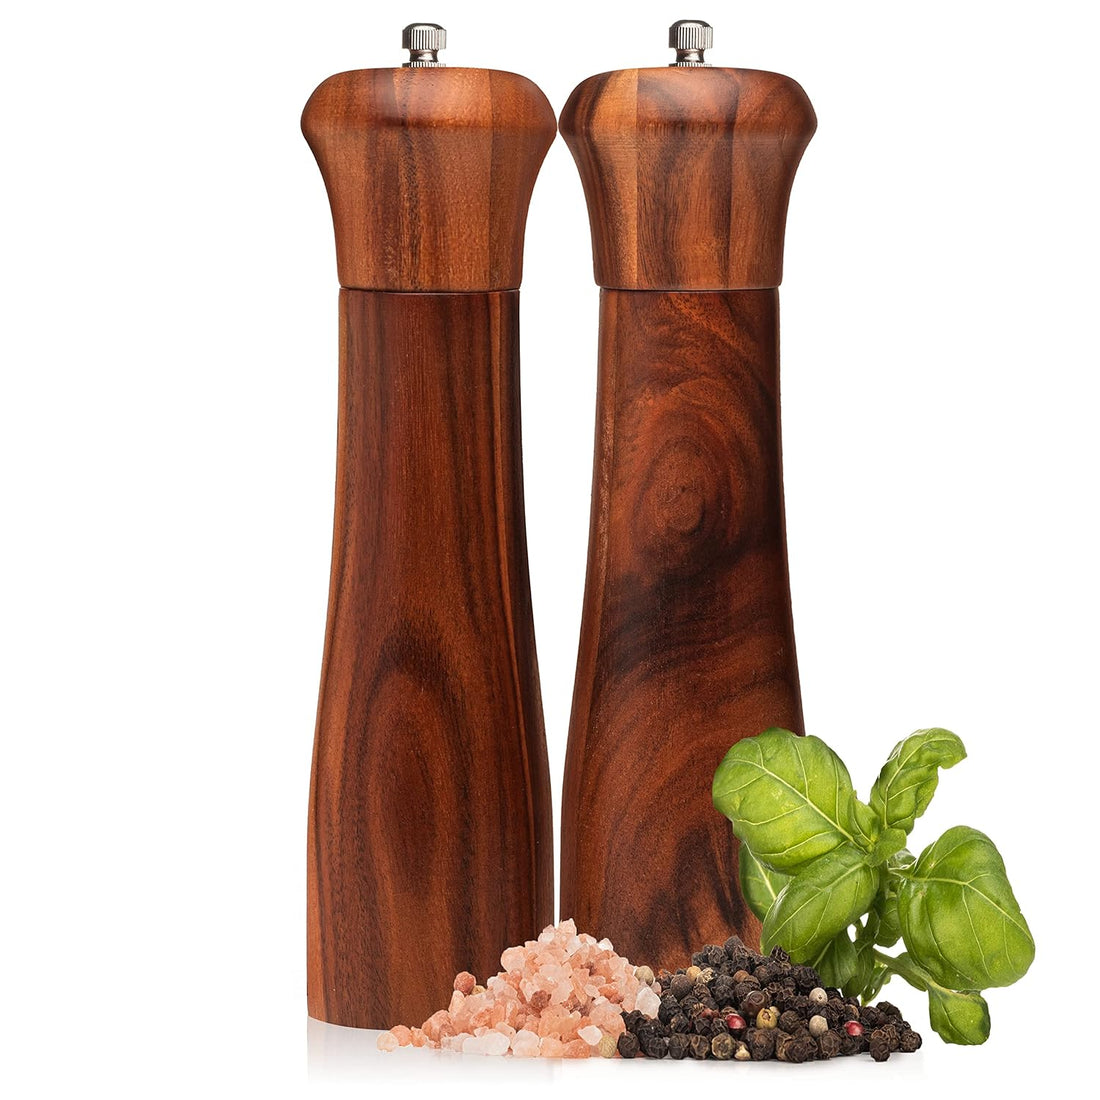 Wooden Salt and Pepper Grinder Set - Premium Acacia Wood Grinders with Adjustable Ceramic Grinding Mechanism - 8 inch Refillable Salt and Pepper Mills